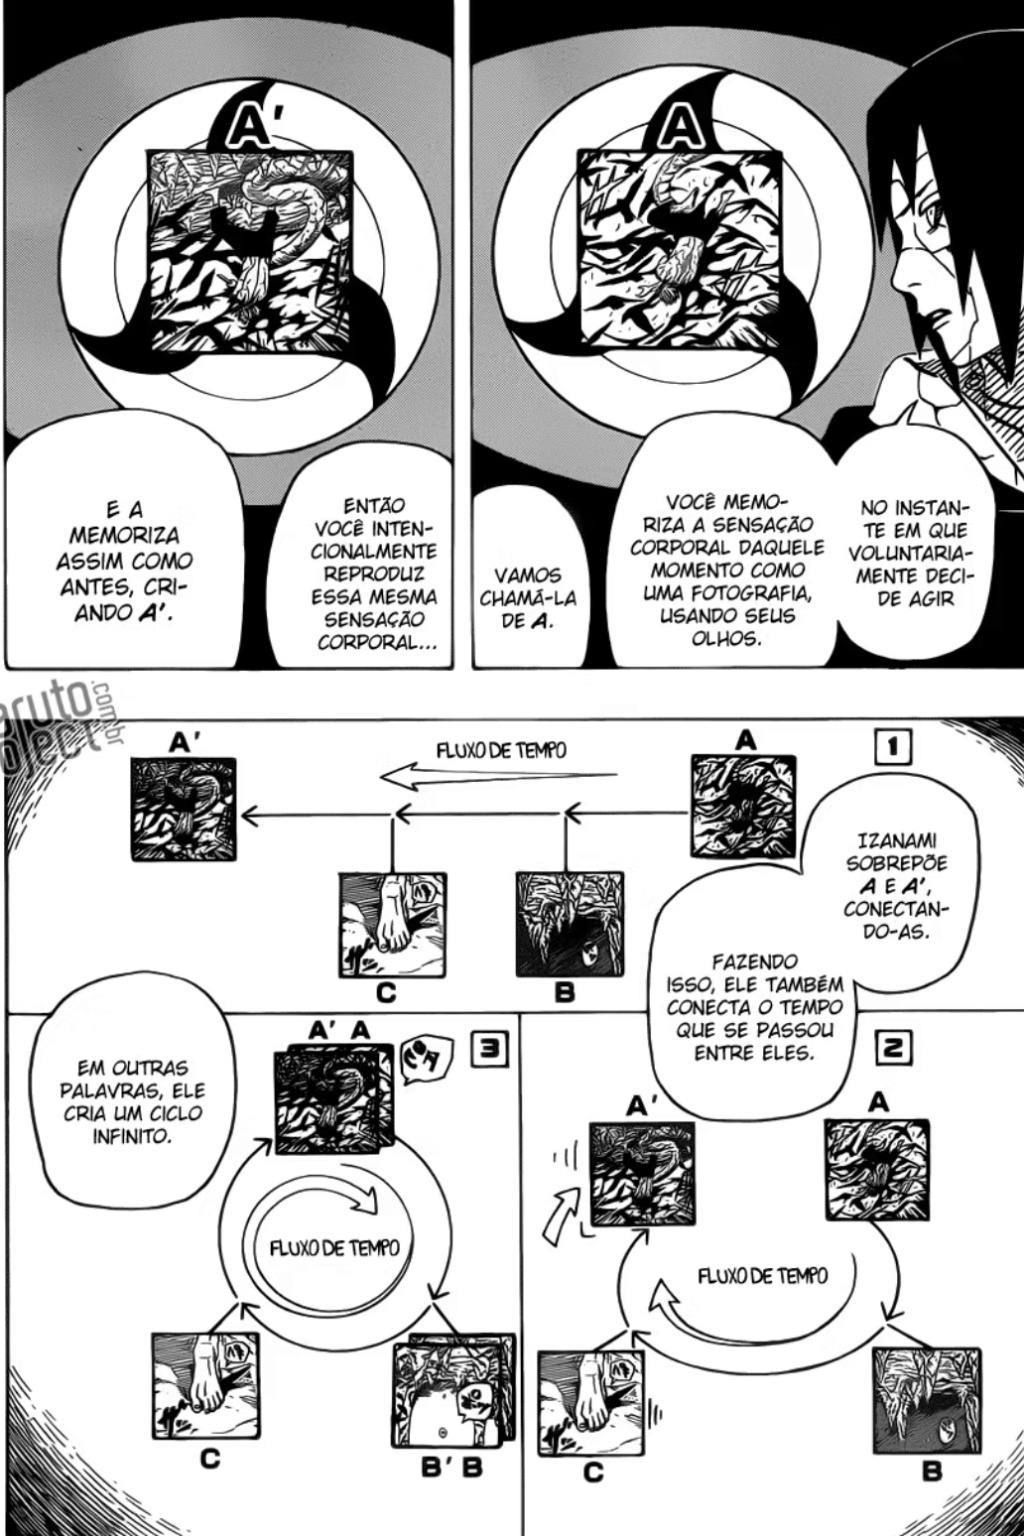 Kabuto modo Sennin vs Itachi edo - Página 2 Smart515